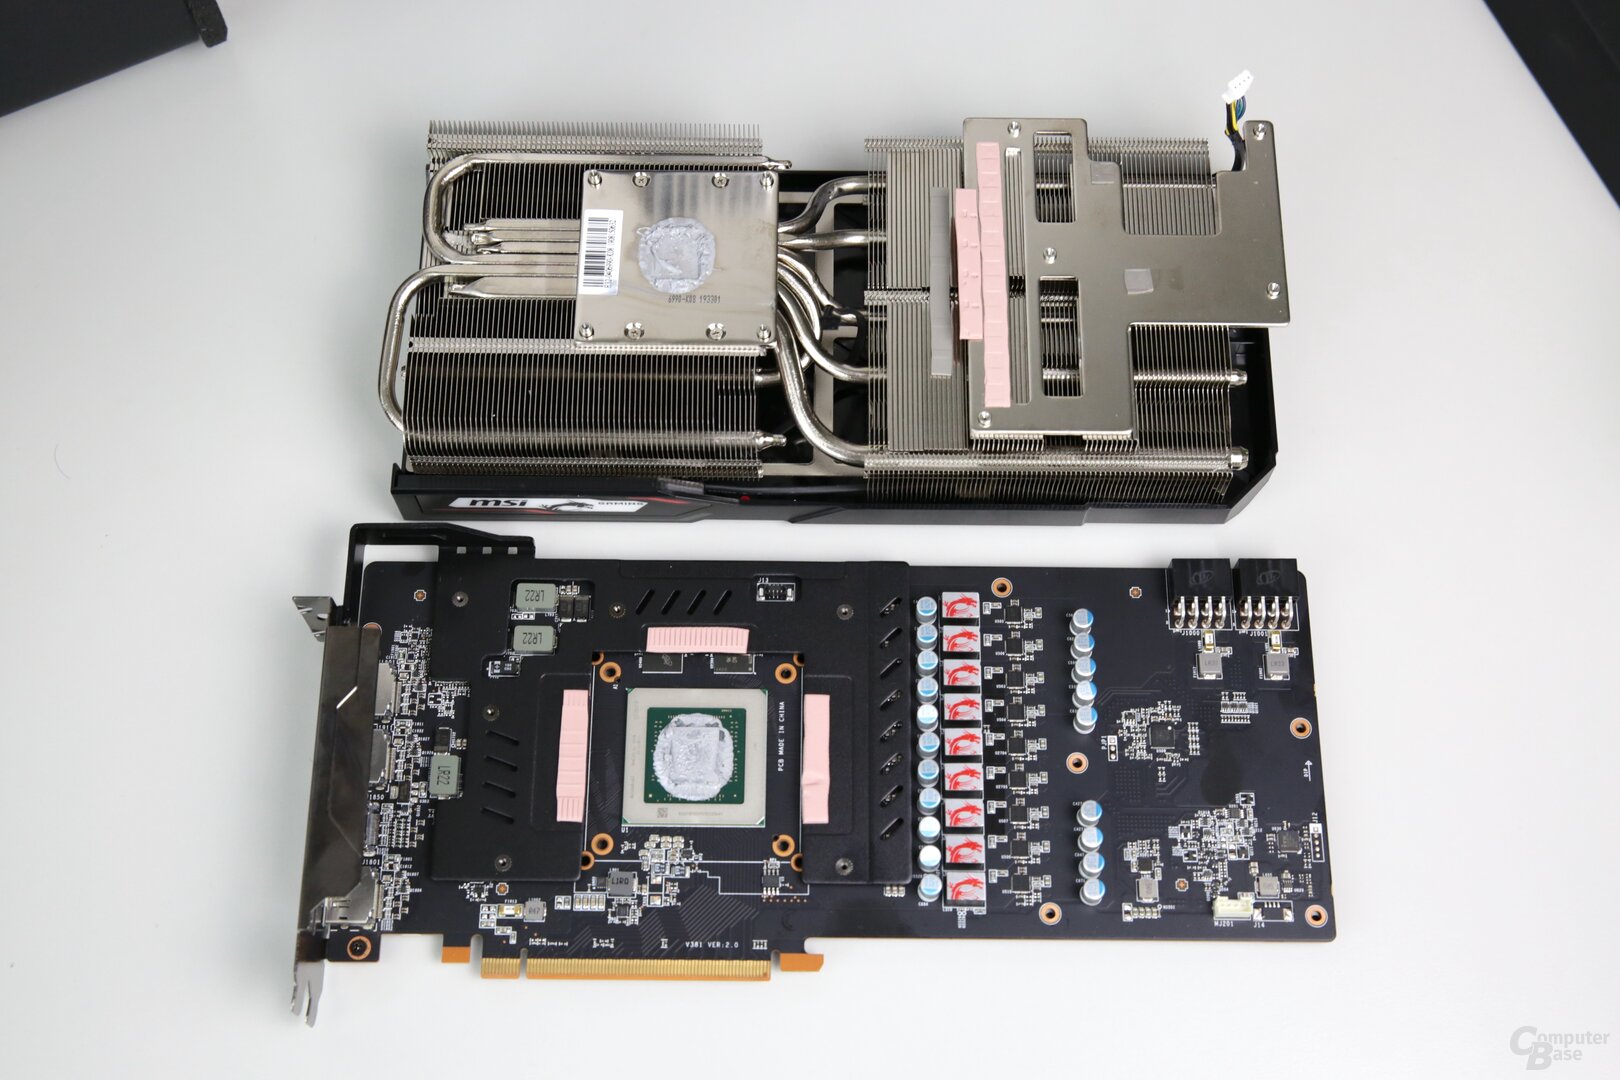 PCB und Kühlsystem der MSI Radeon RX 5700 XT Gaming XT